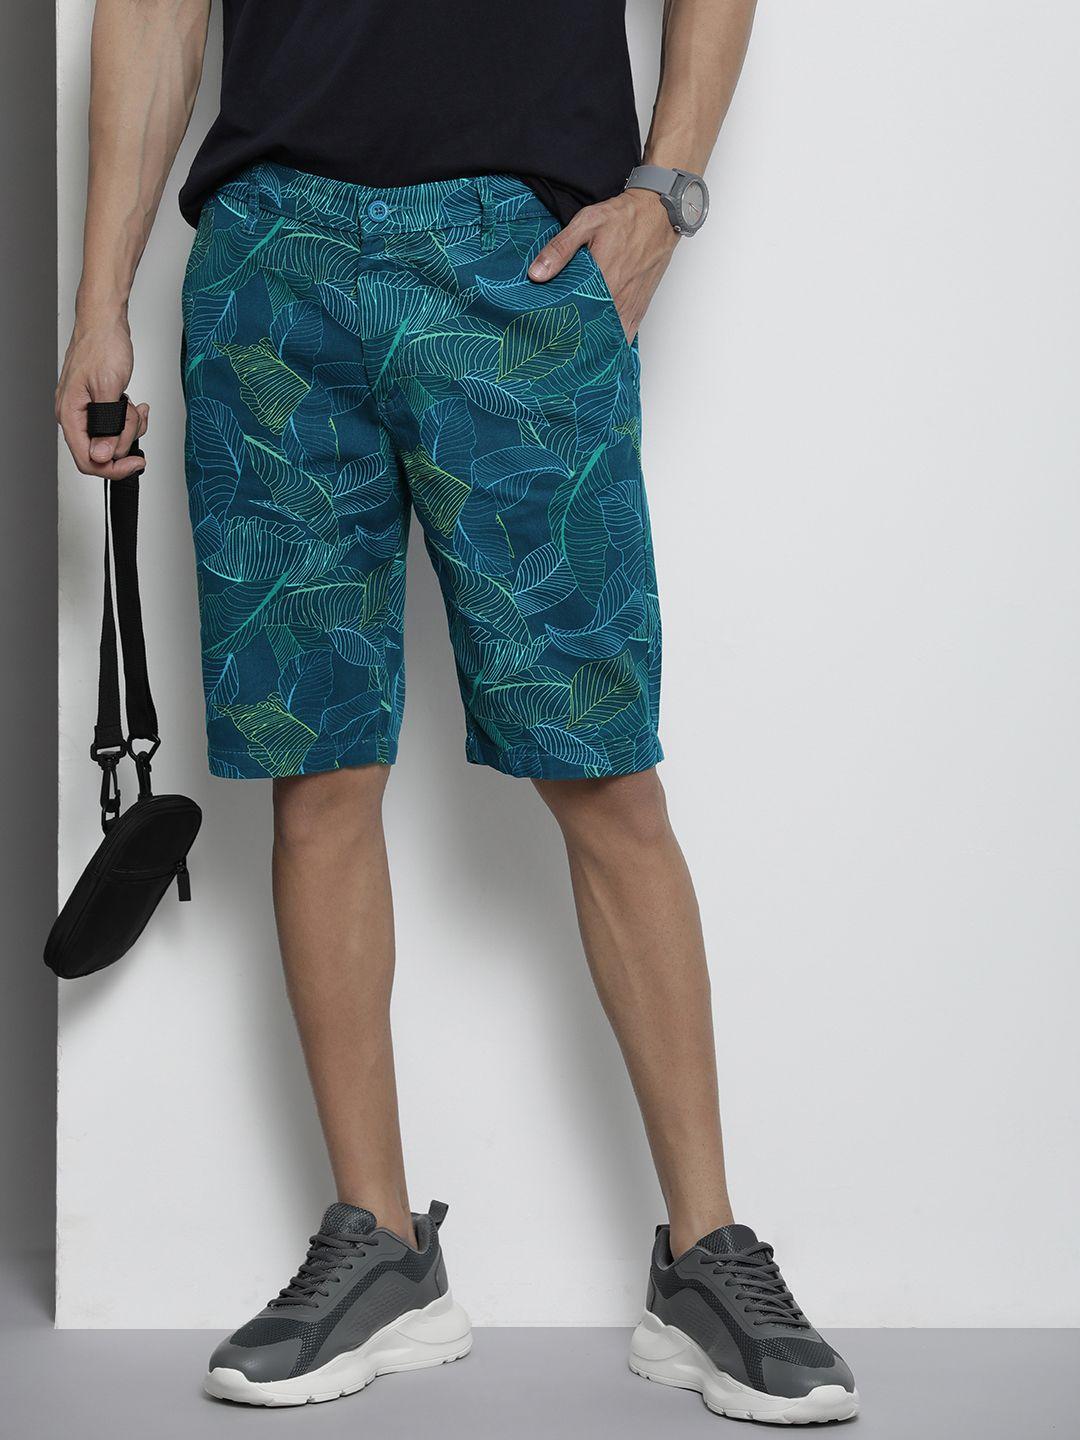 the-indian-garage-co-men-teal-blue-&-green-printed-slim-fit-shorts